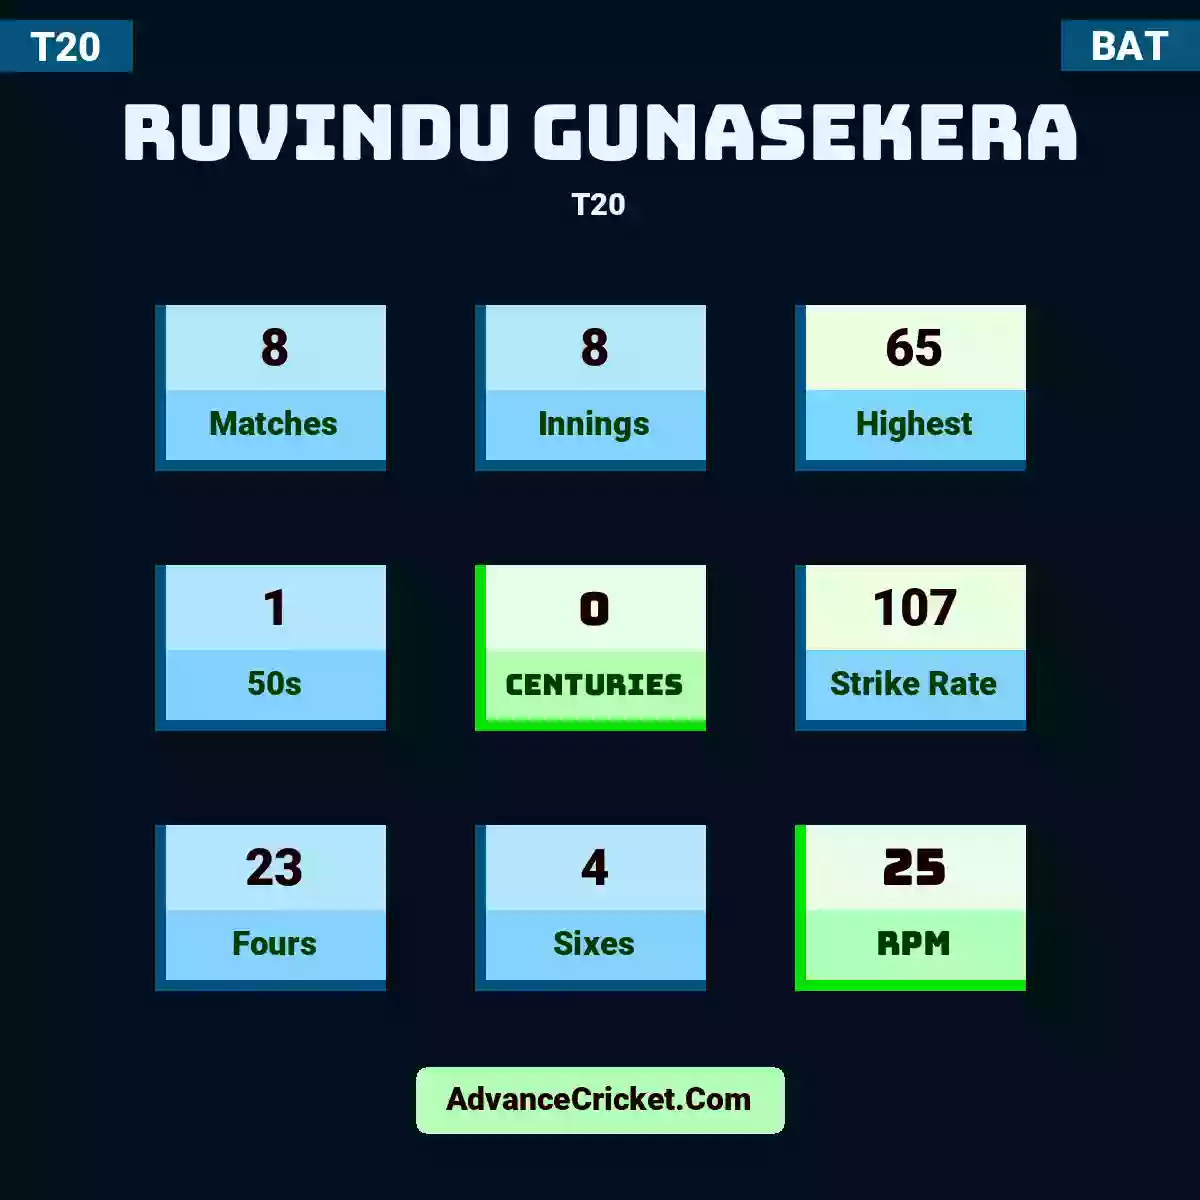 Ruvindu Gunasekera T20 , Ruvindu Gunasekera played 8 matches, scored 65 runs as highest, 1 half-centuries, and 0 centuries, with a strike rate of 107. R.Gunasekera hit 23 fours and 4 sixes, with an RPM of 25.